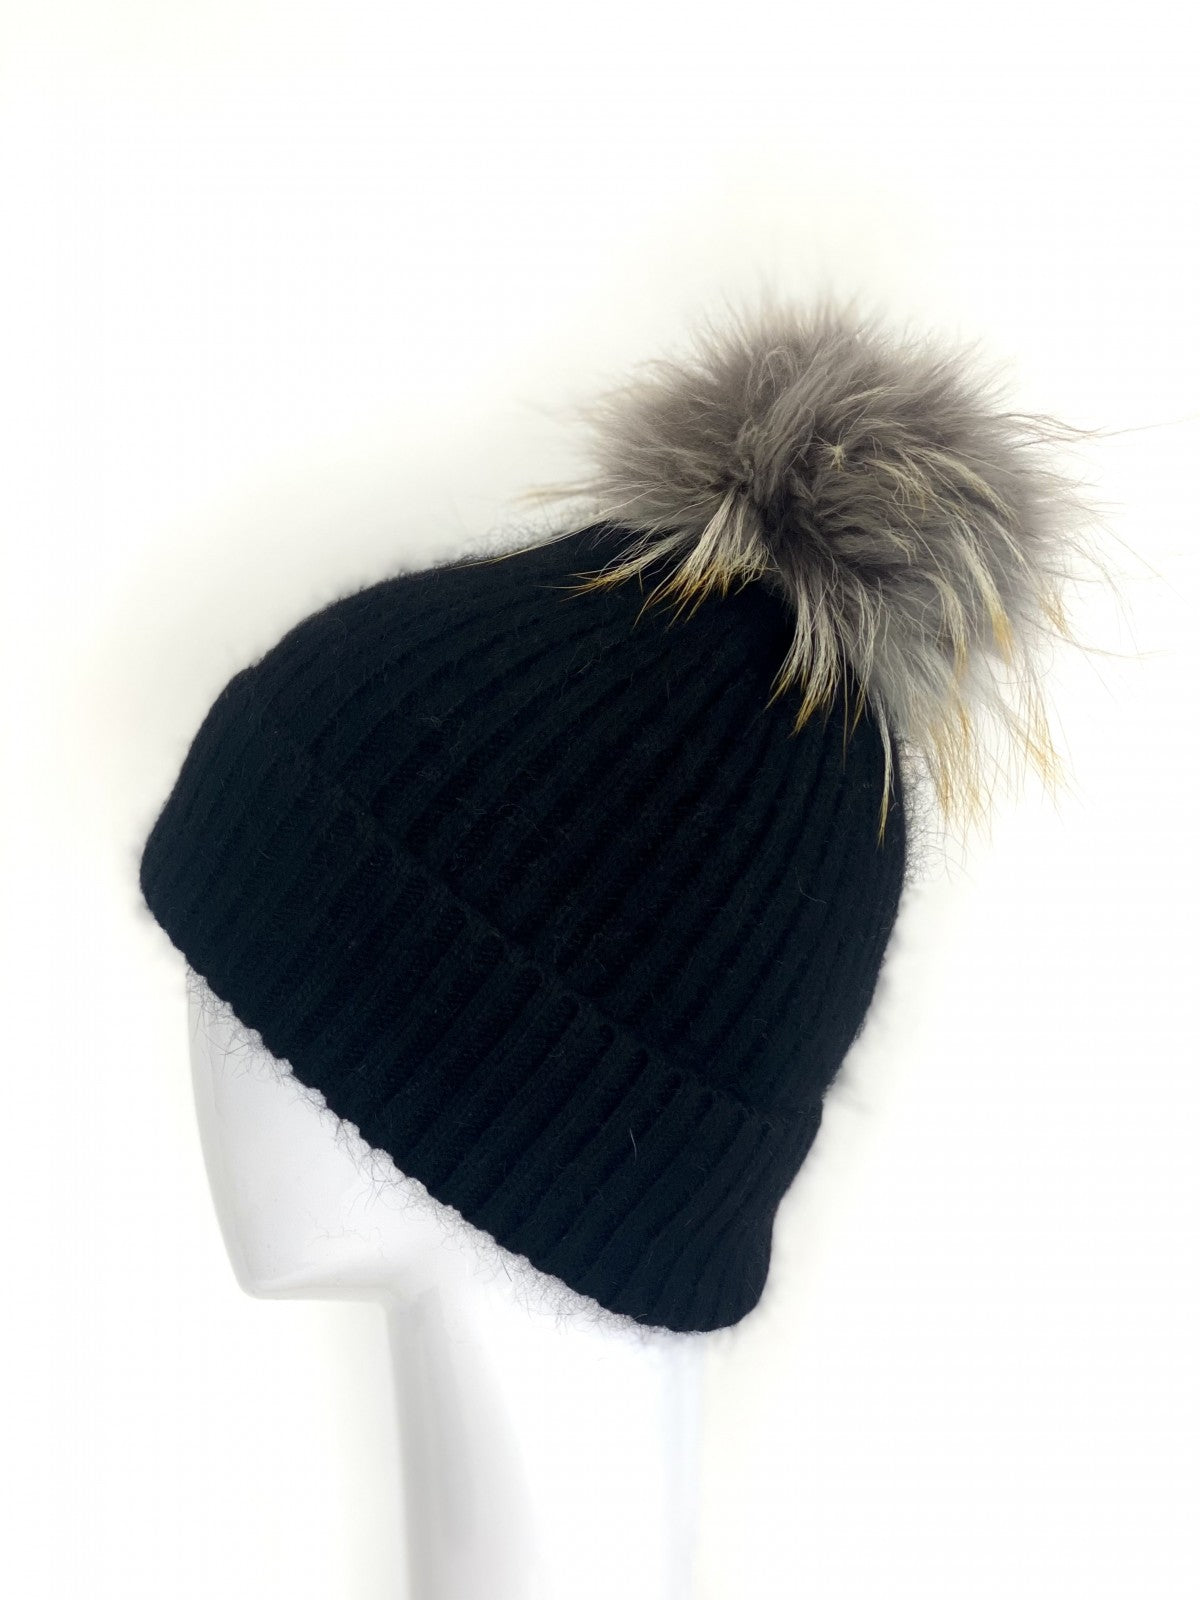 Angora/Wool Blend Hat in Black/Dove Grey